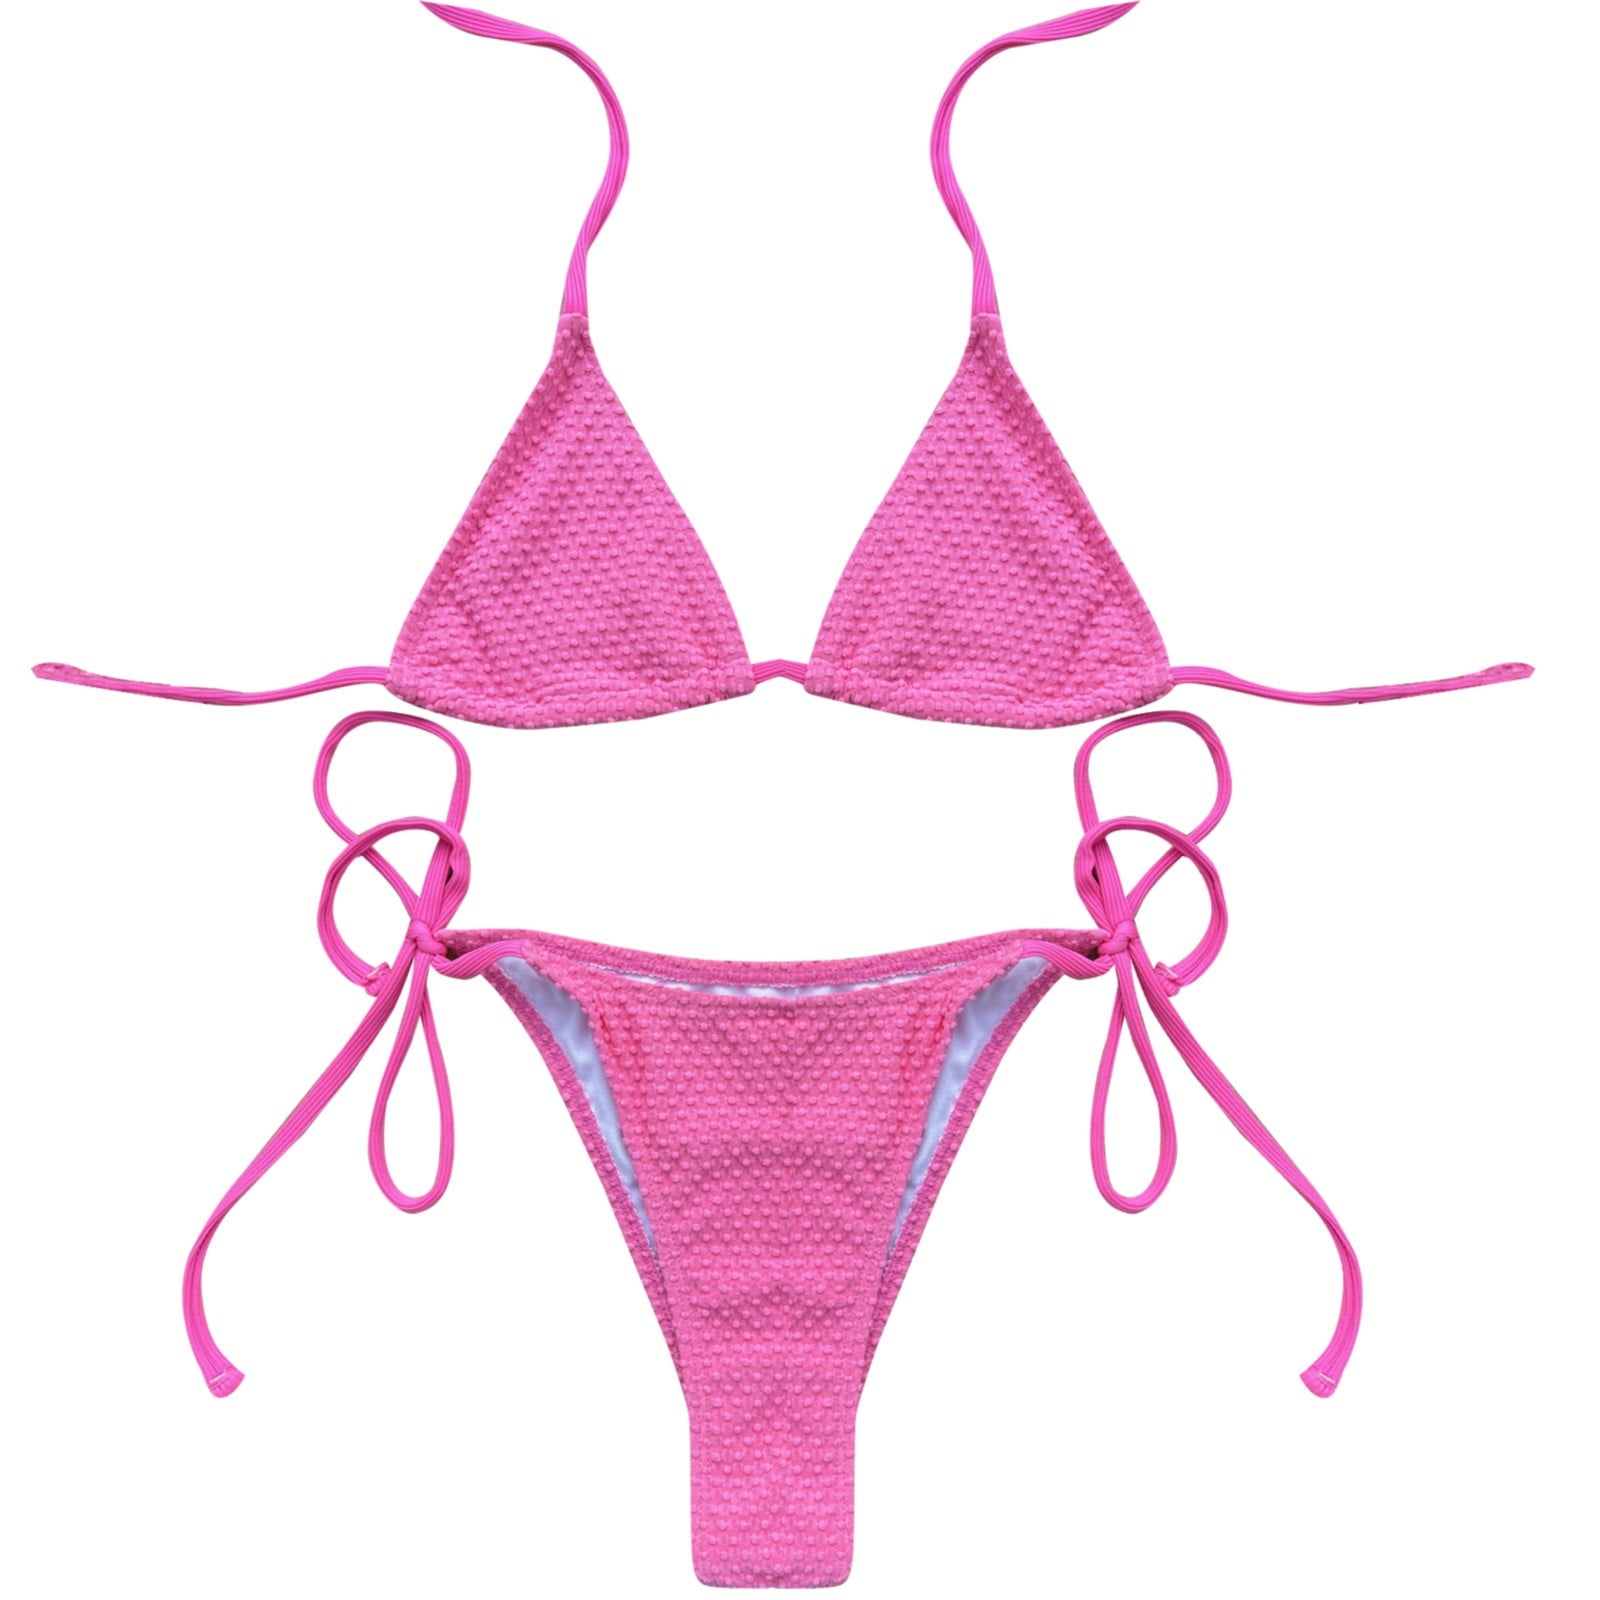 Pink Abstract Print High Leg Scoop Bikini Set